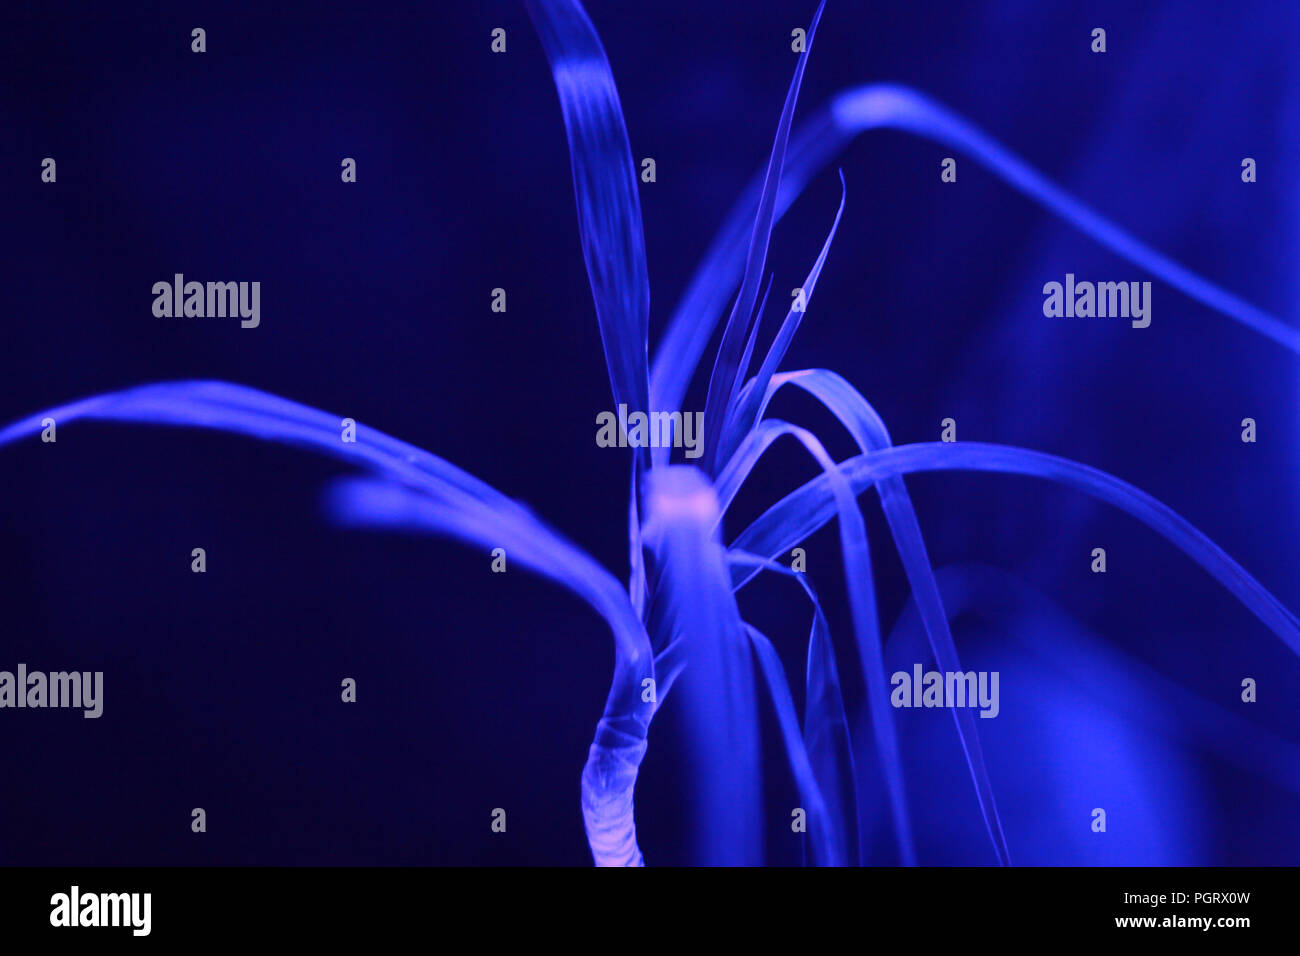 Plants in neon fluorescence blue light Stock Photo